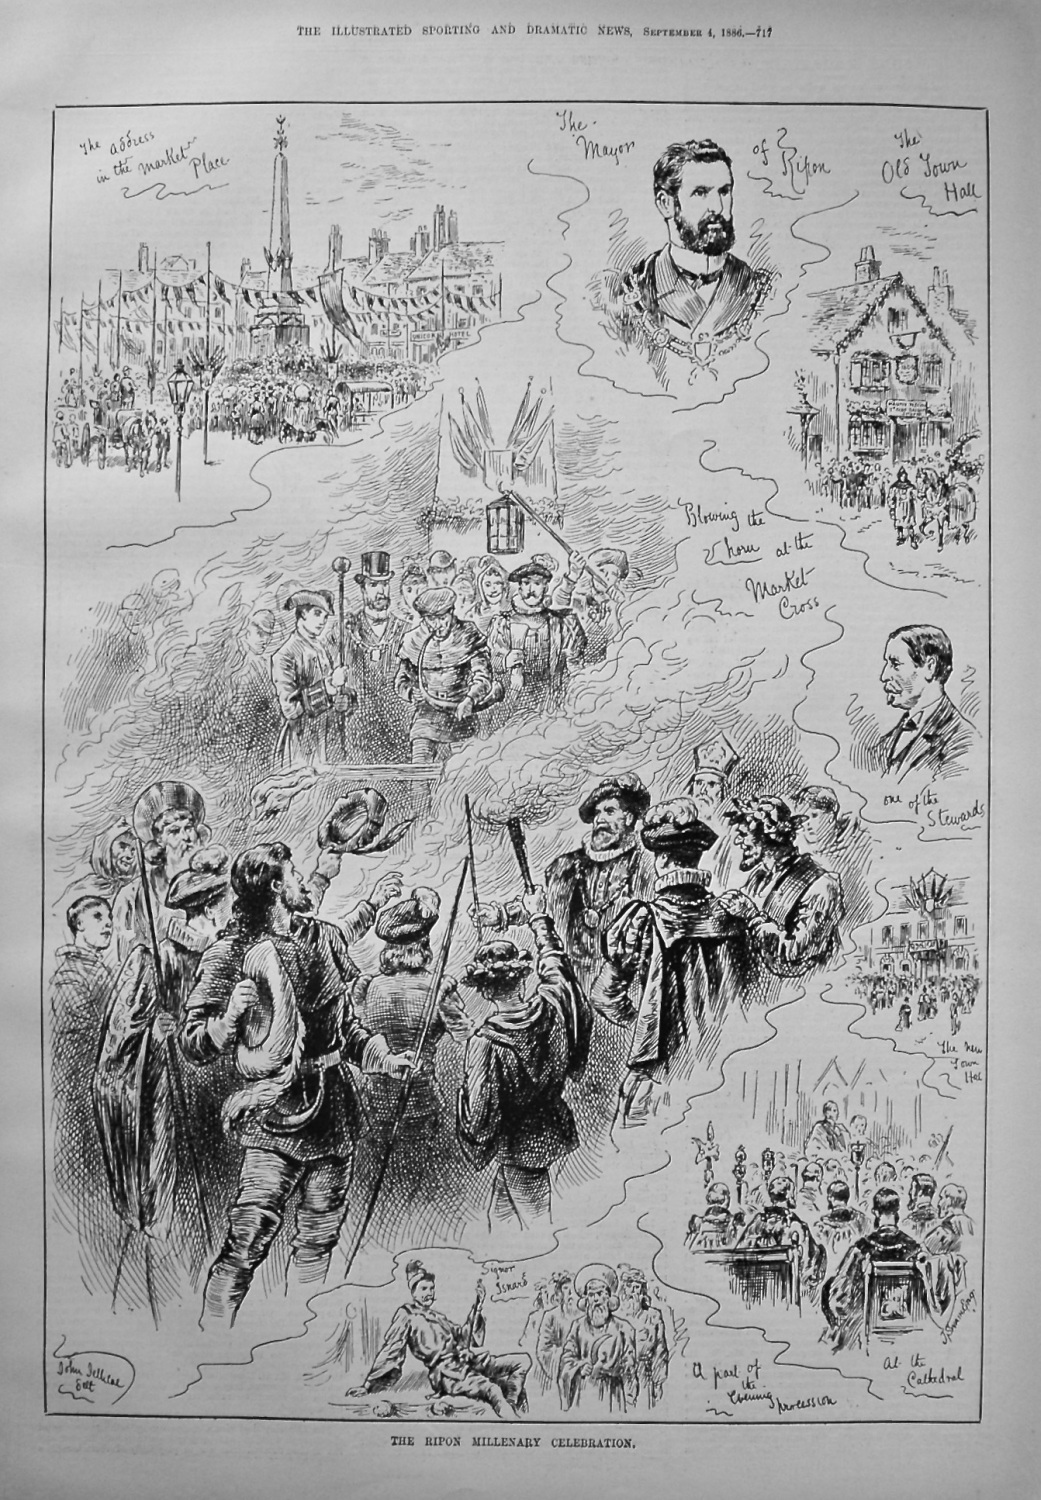 The Ripon Millenary Celebration. 1886.